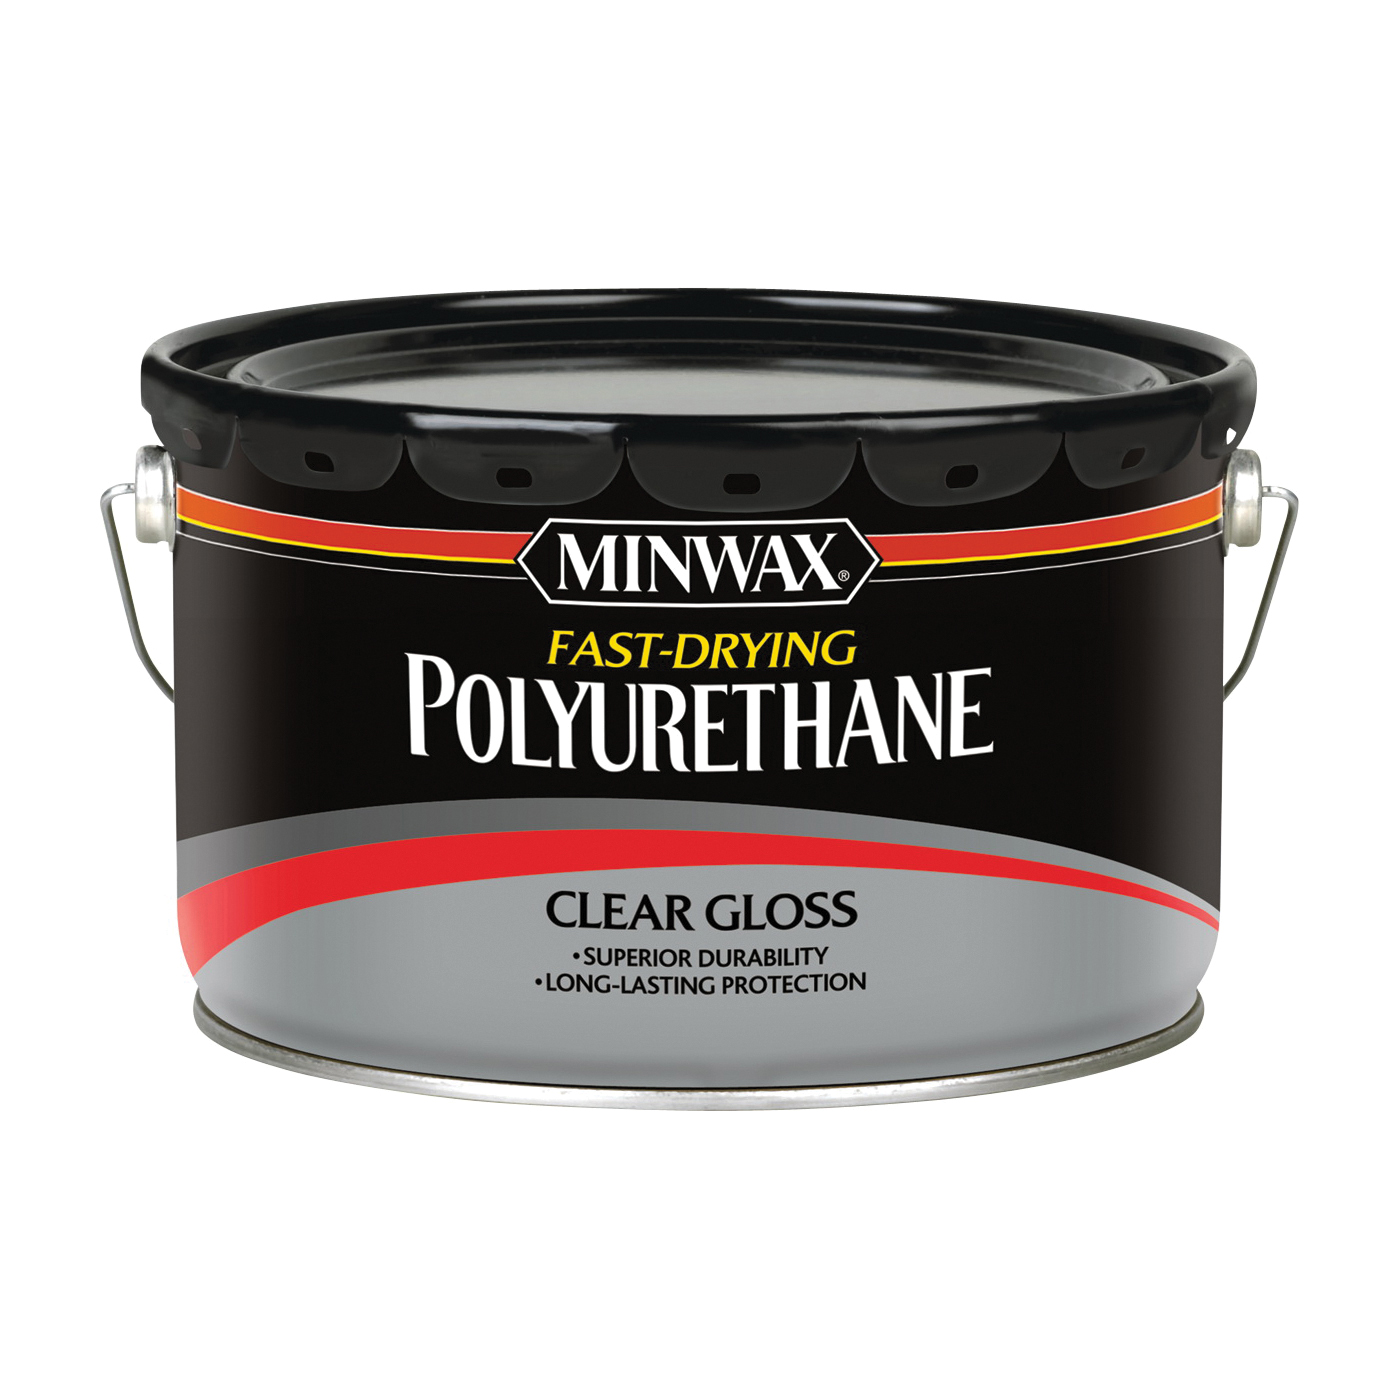 Minwax Fast-Drying Polyurethane Clear Gloss Oil-based Polyurethane